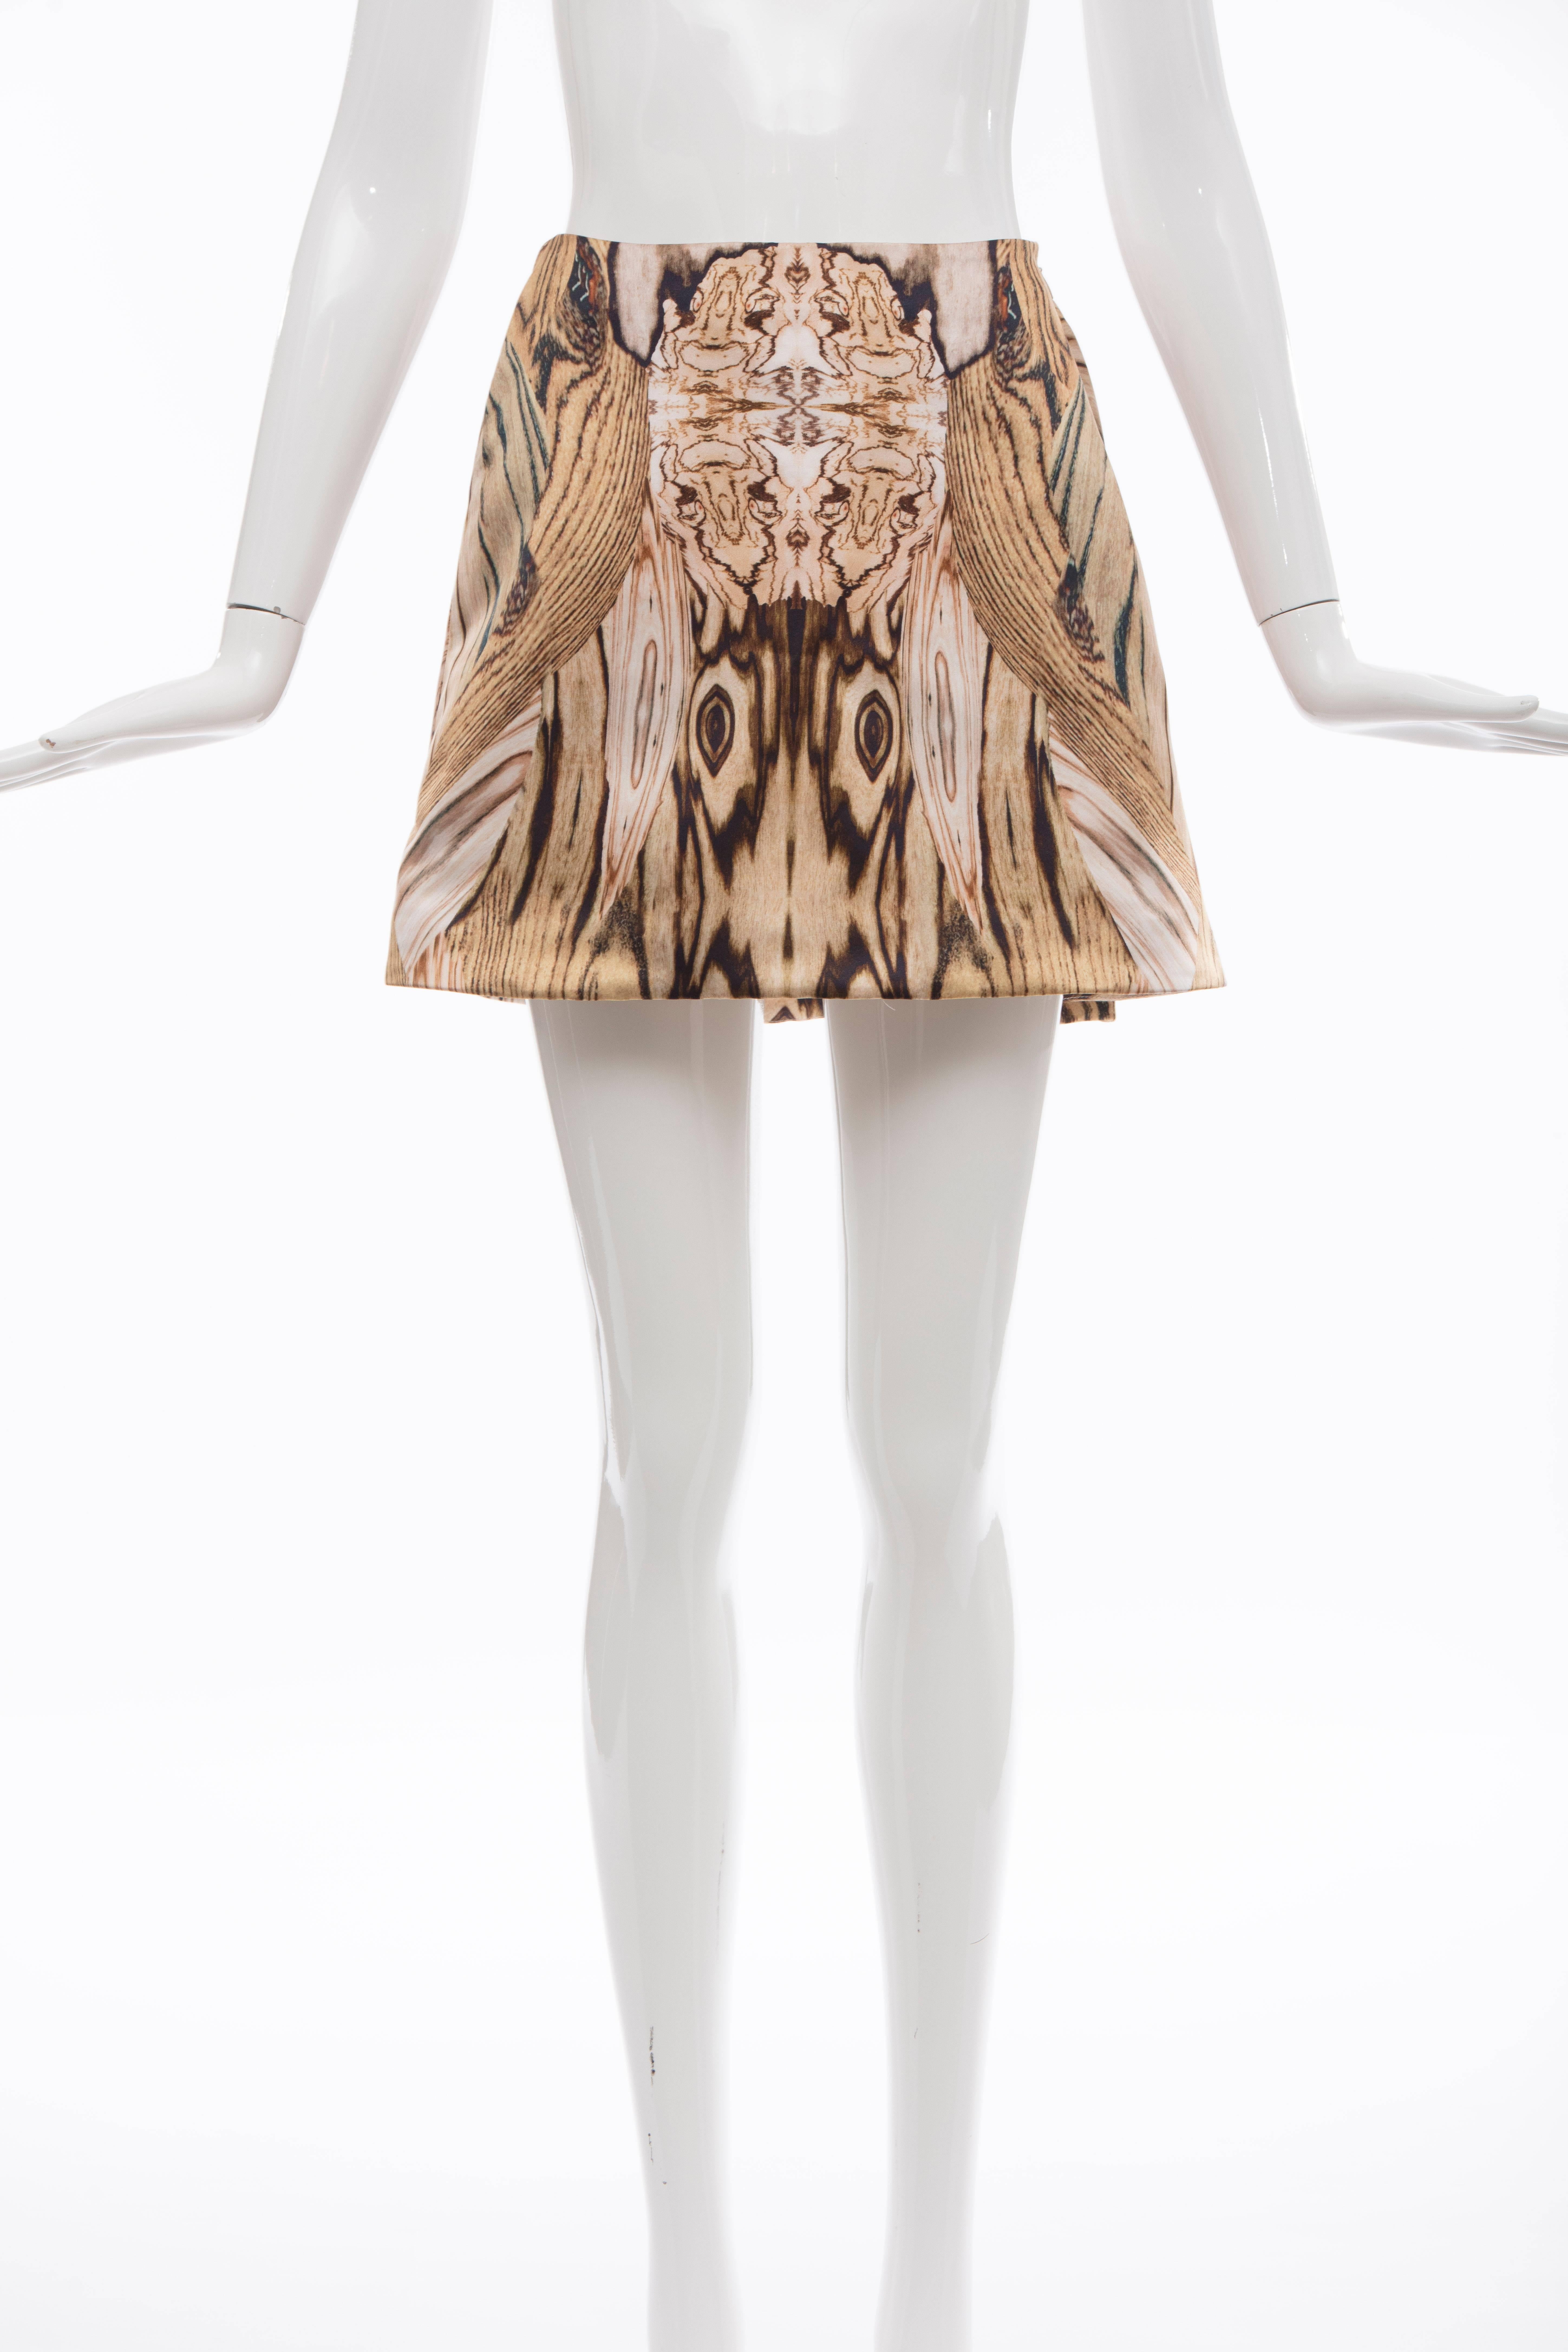 Alexander McQueen, Spring-Summer 2009 silk wood-grain digital print mini-skirt with concealed side zip closure.

IT. 38
US. 2
Waist: 24, Hip 38, Length 16.5
